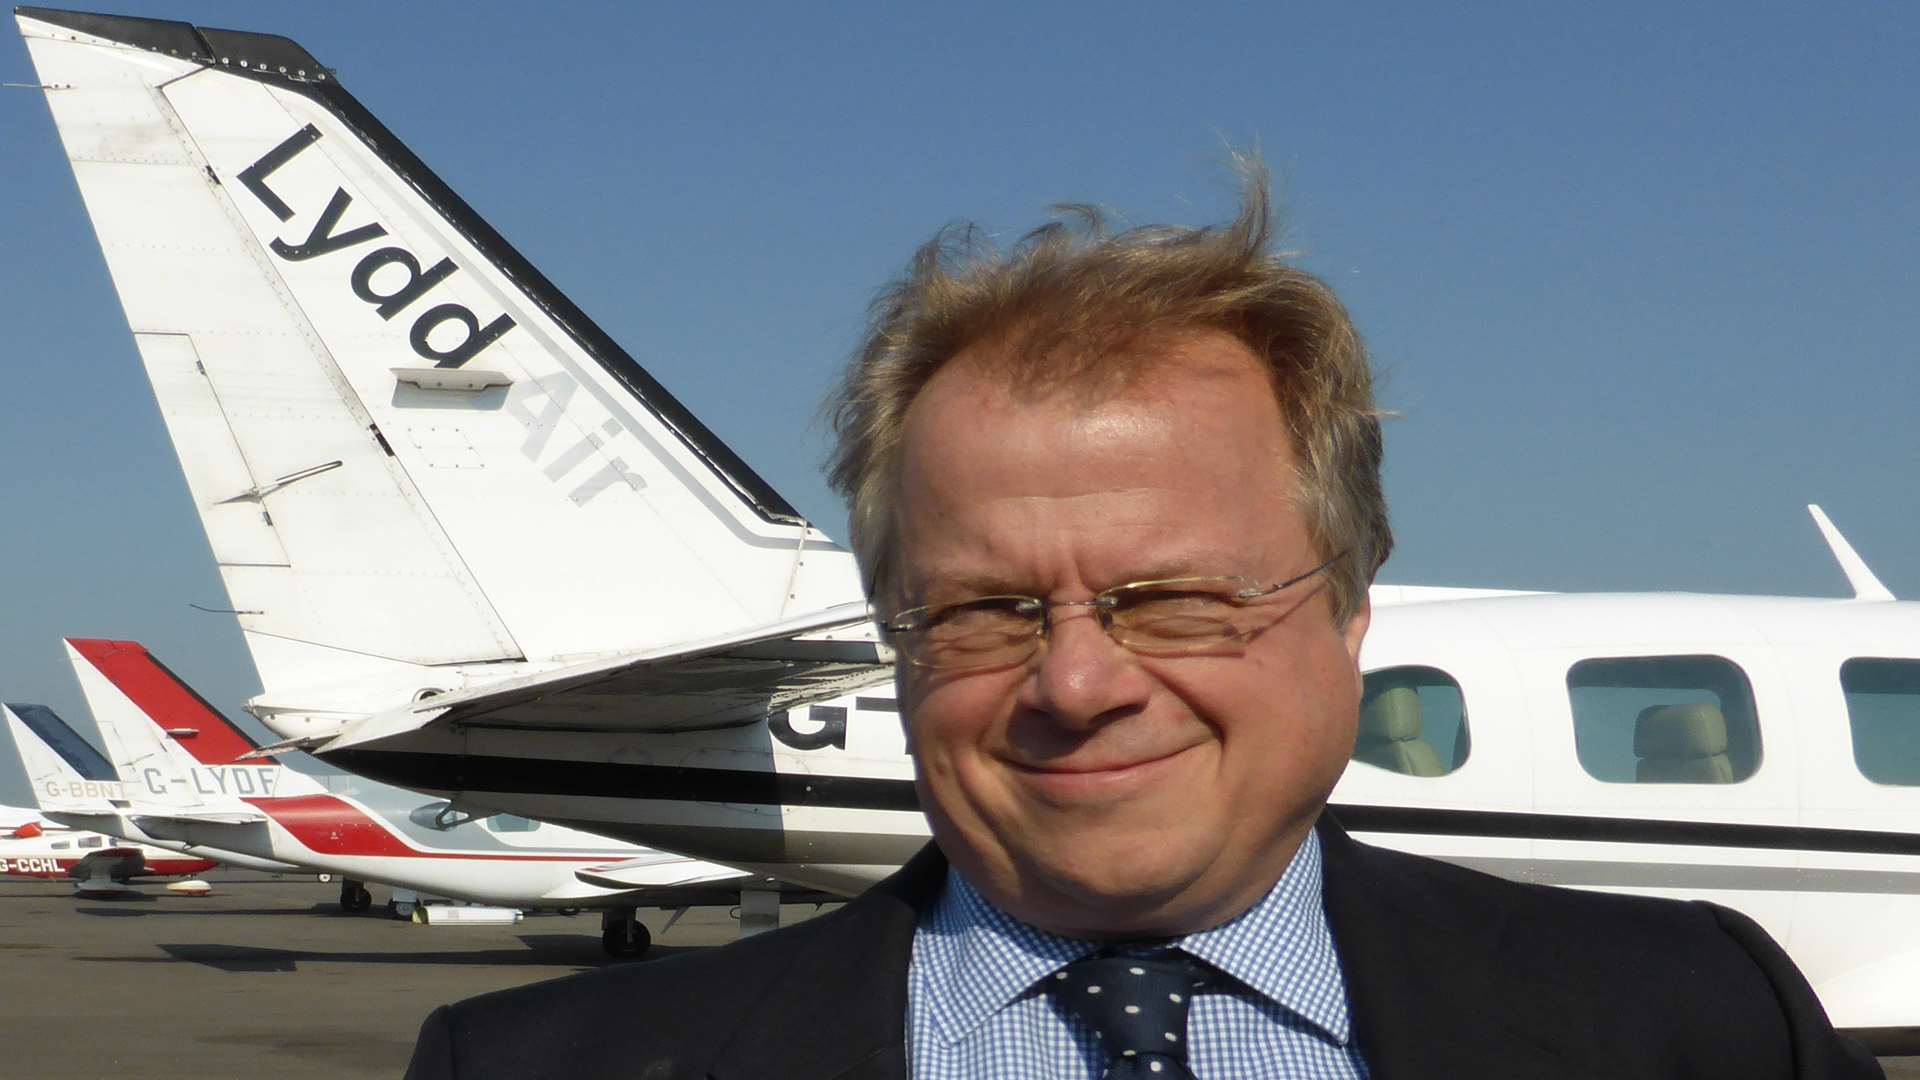 Lydd airport chief executive Charles Buchanan